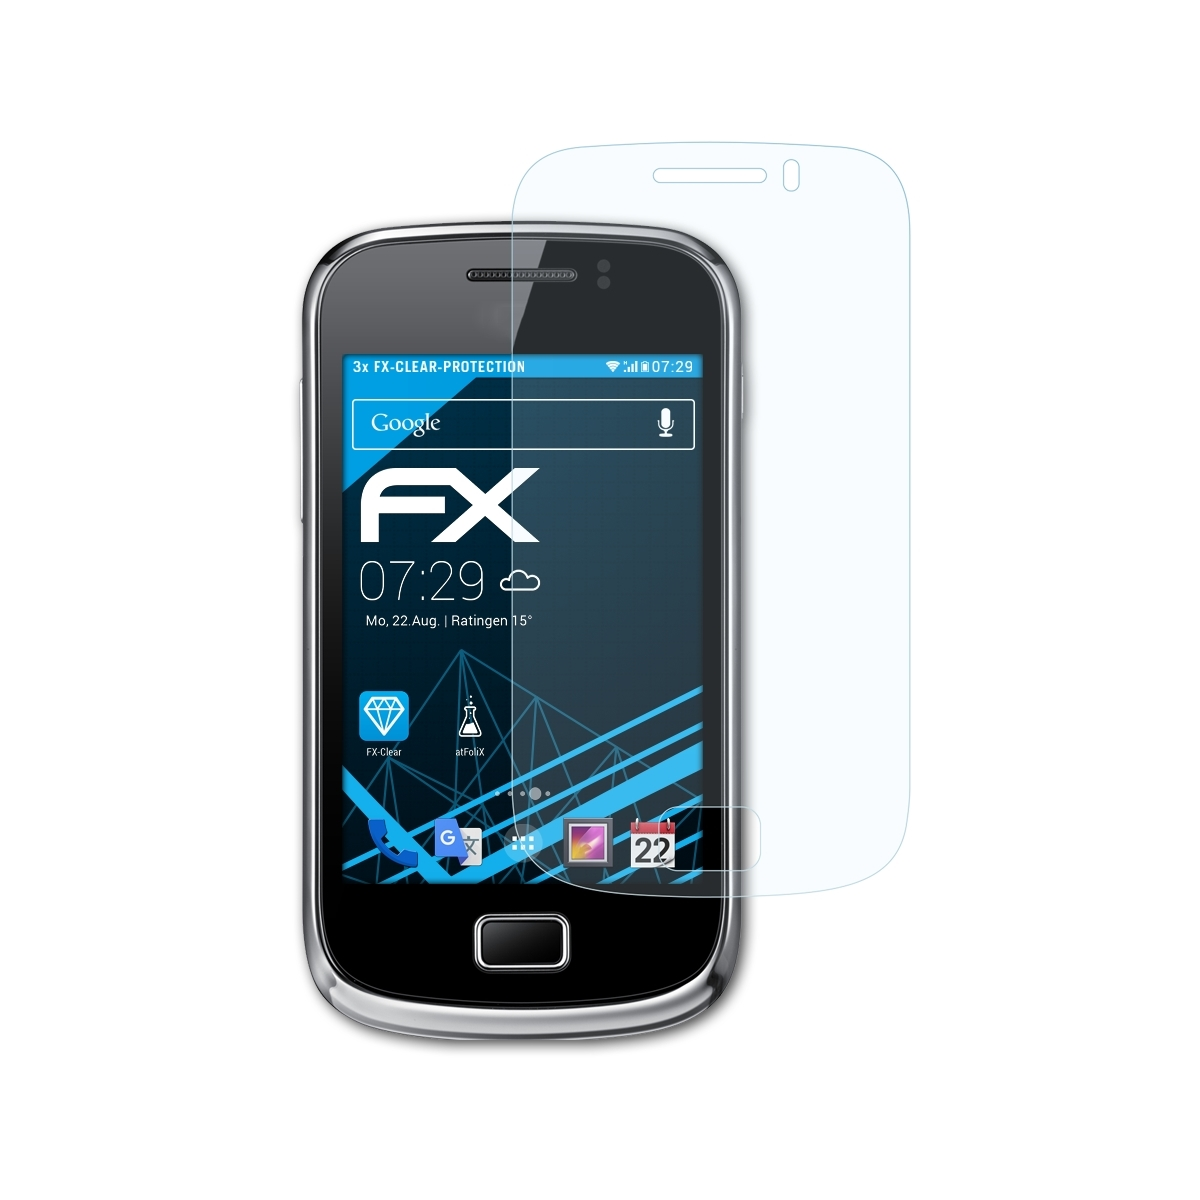 (GT-S6500)) mini Samsung 2 FX-Clear Displayschutz(für ATFOLIX 3x Galaxy